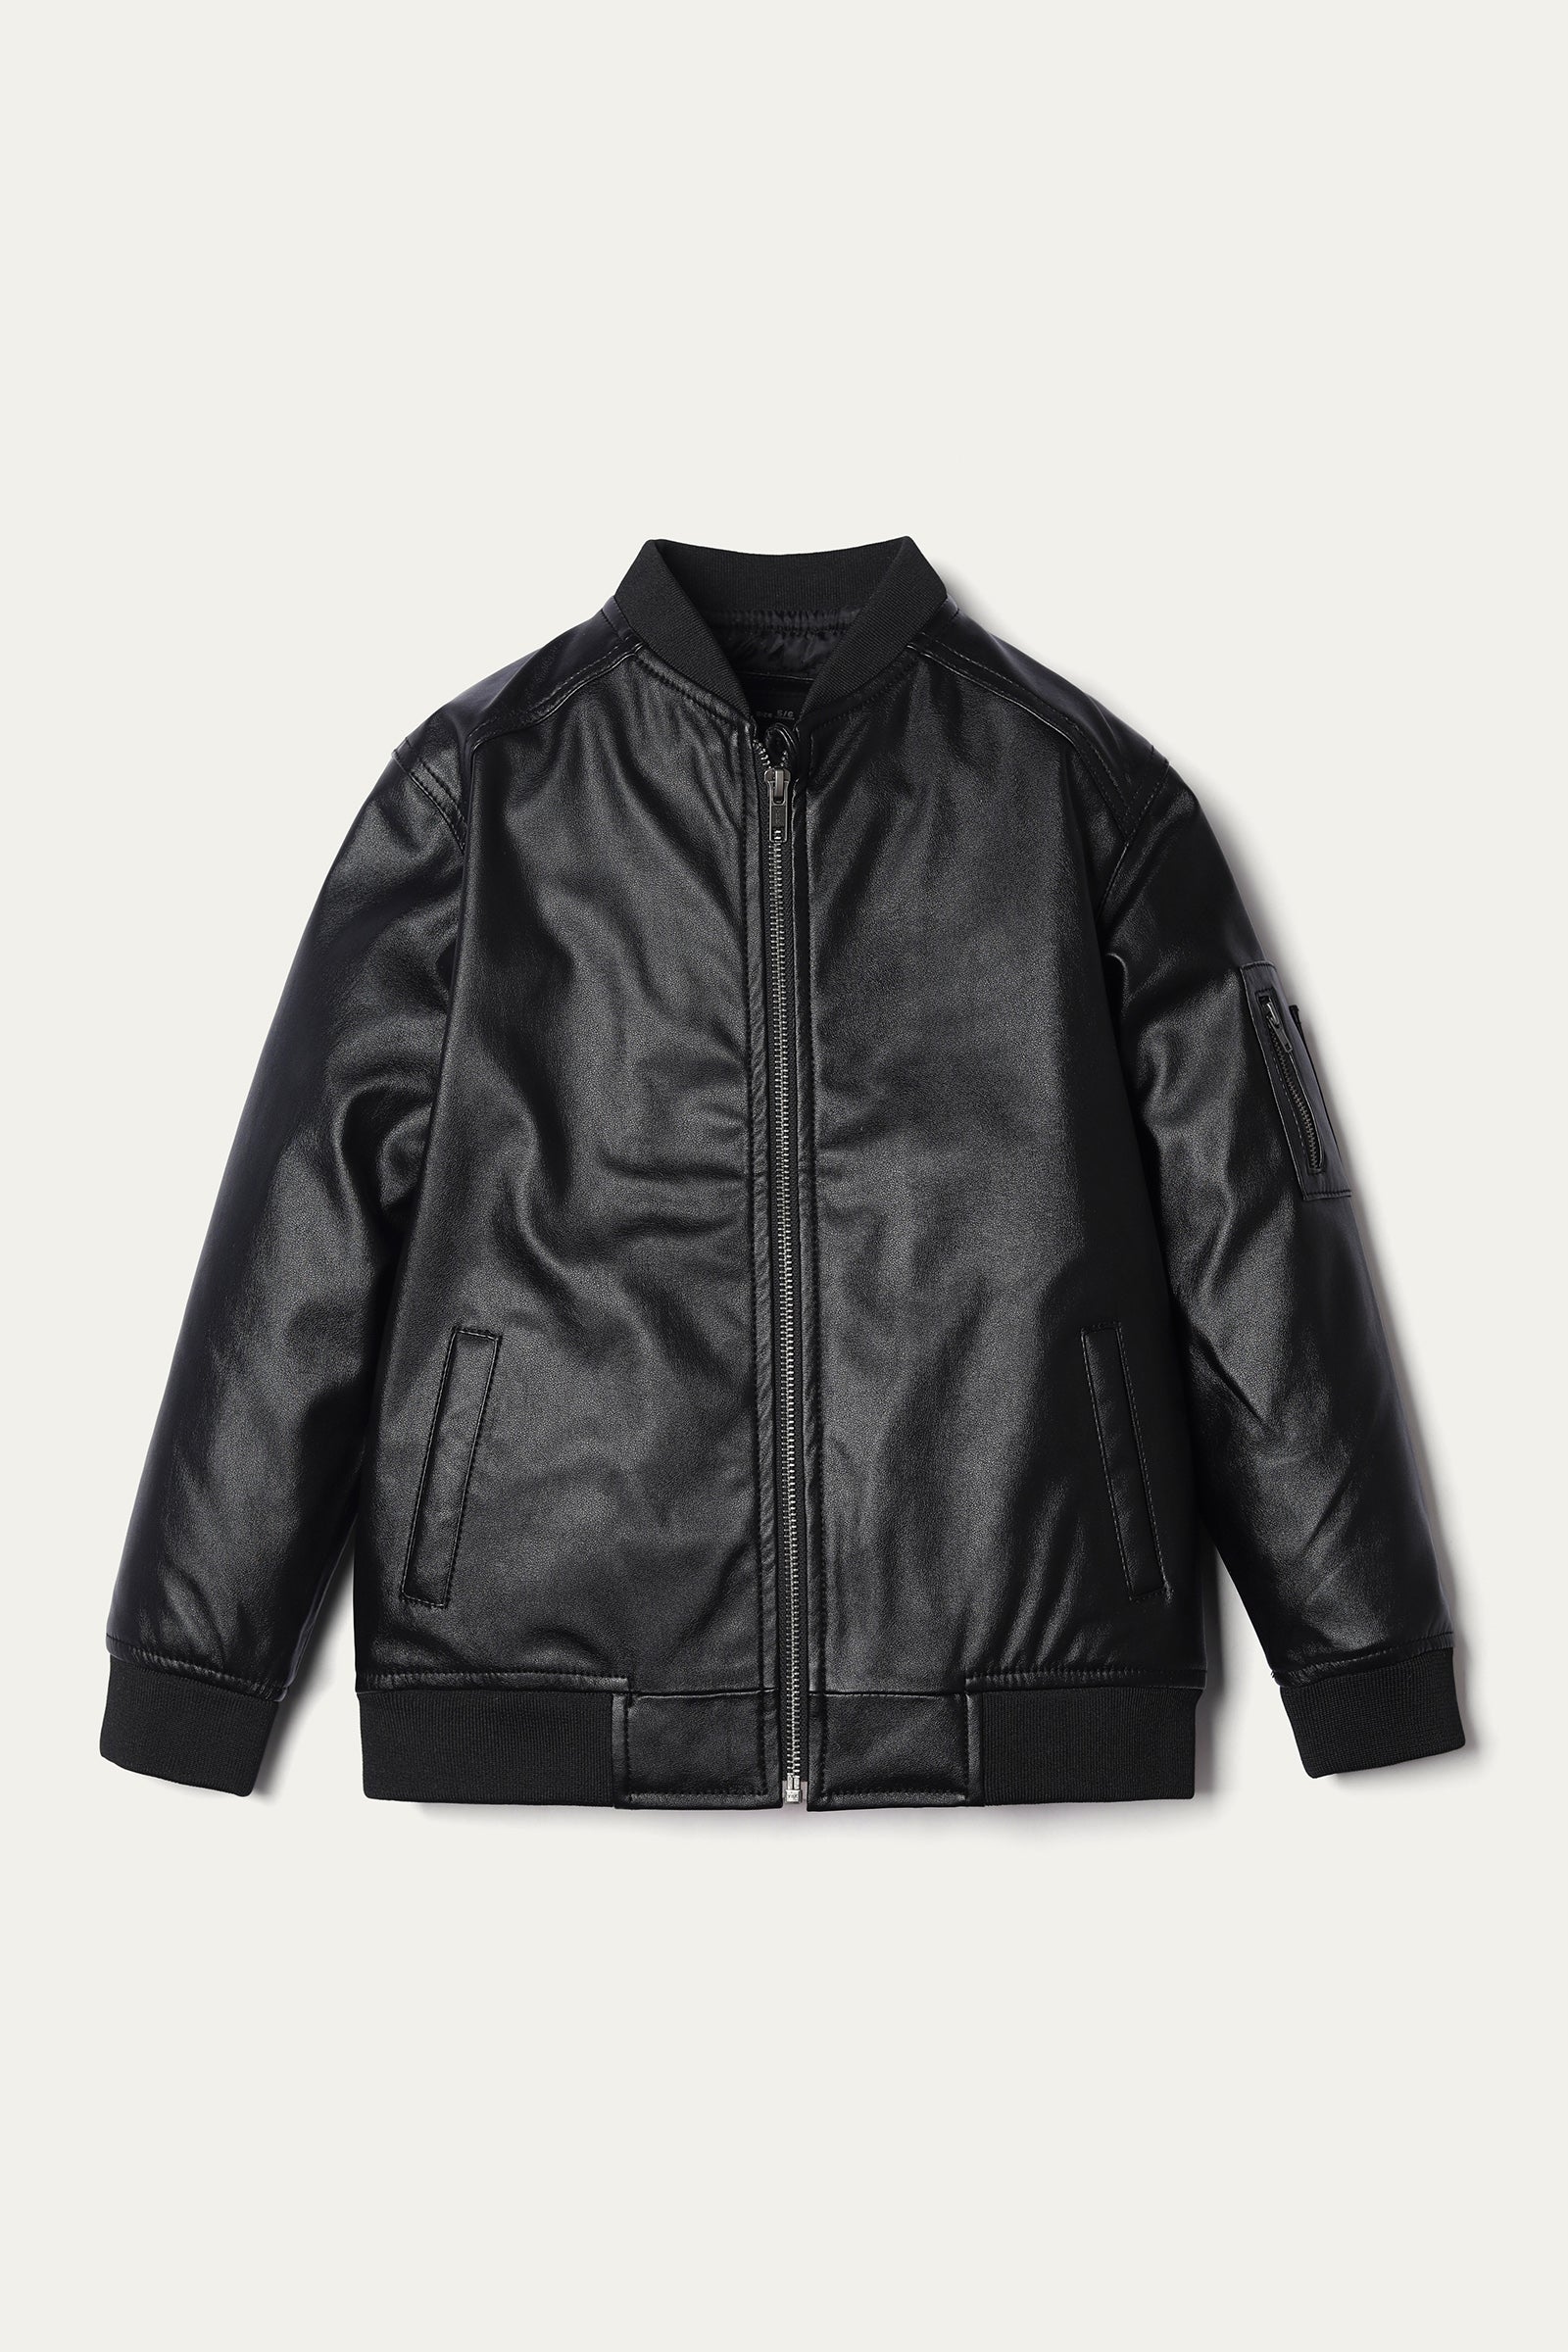 Leather Jacket (MSBJK-01)